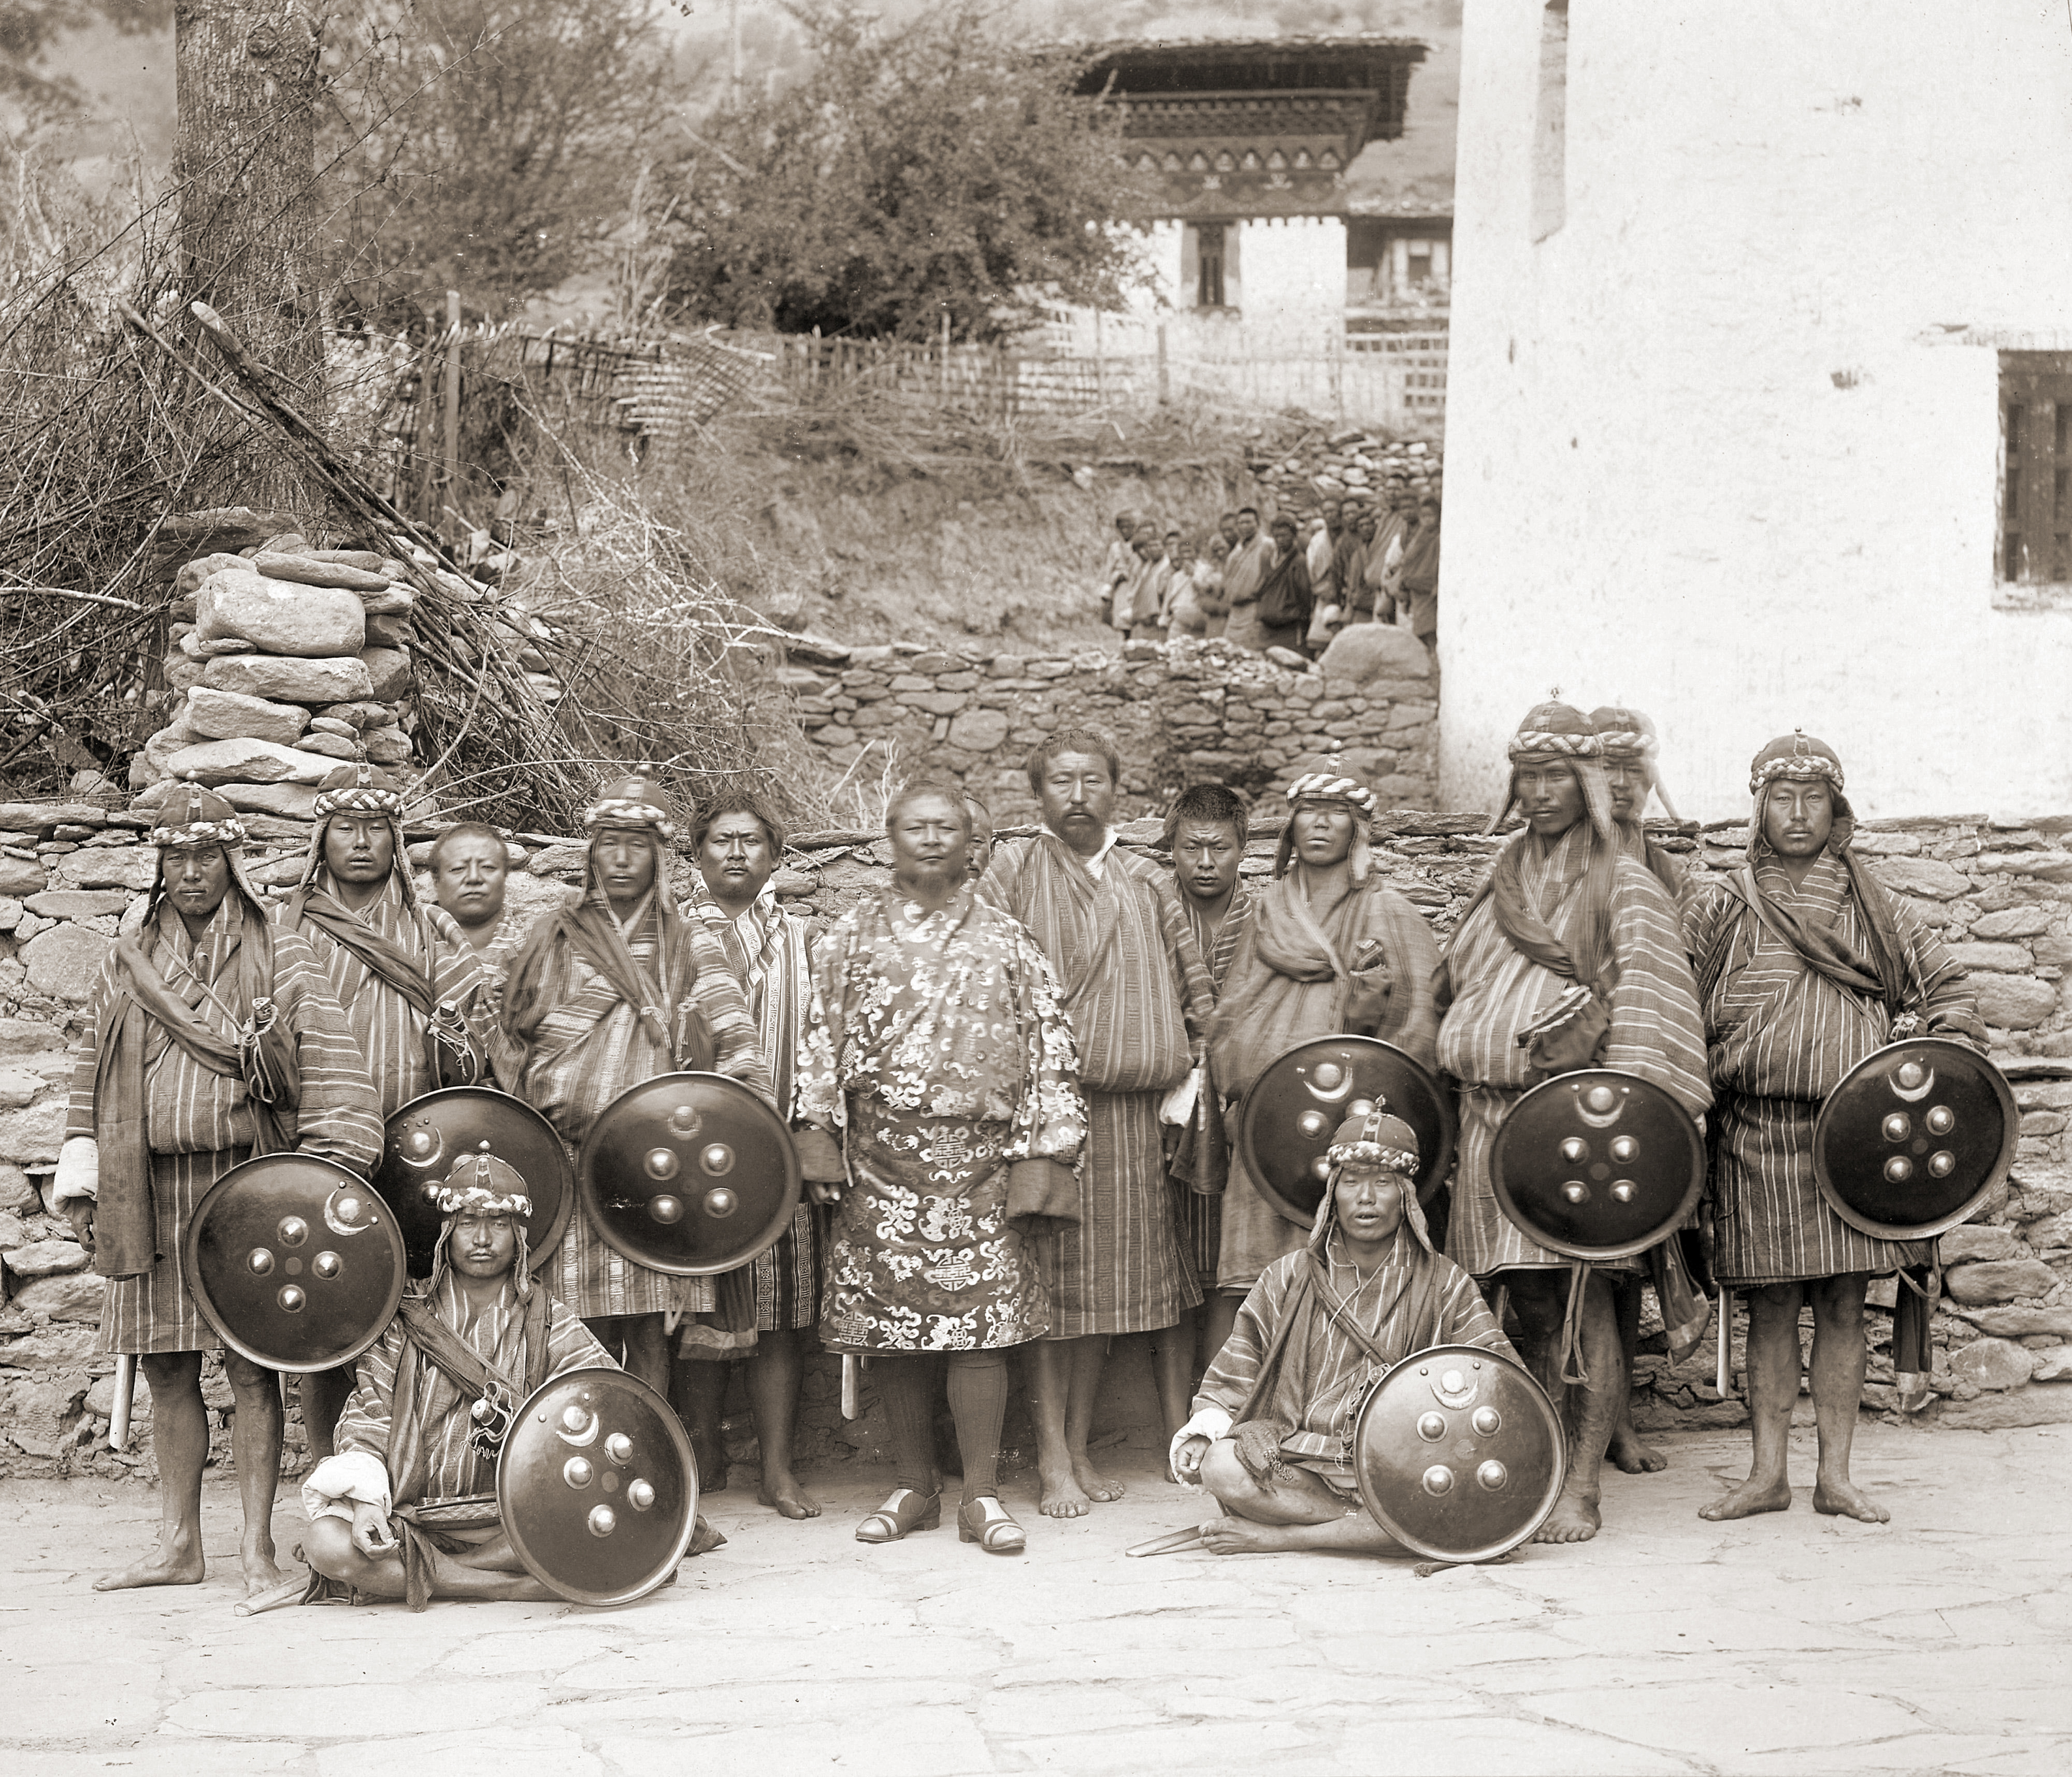 Sir Ugyen Wangchuck, with his bodyguards, Tongsa Dzong in Bhutan, 1905